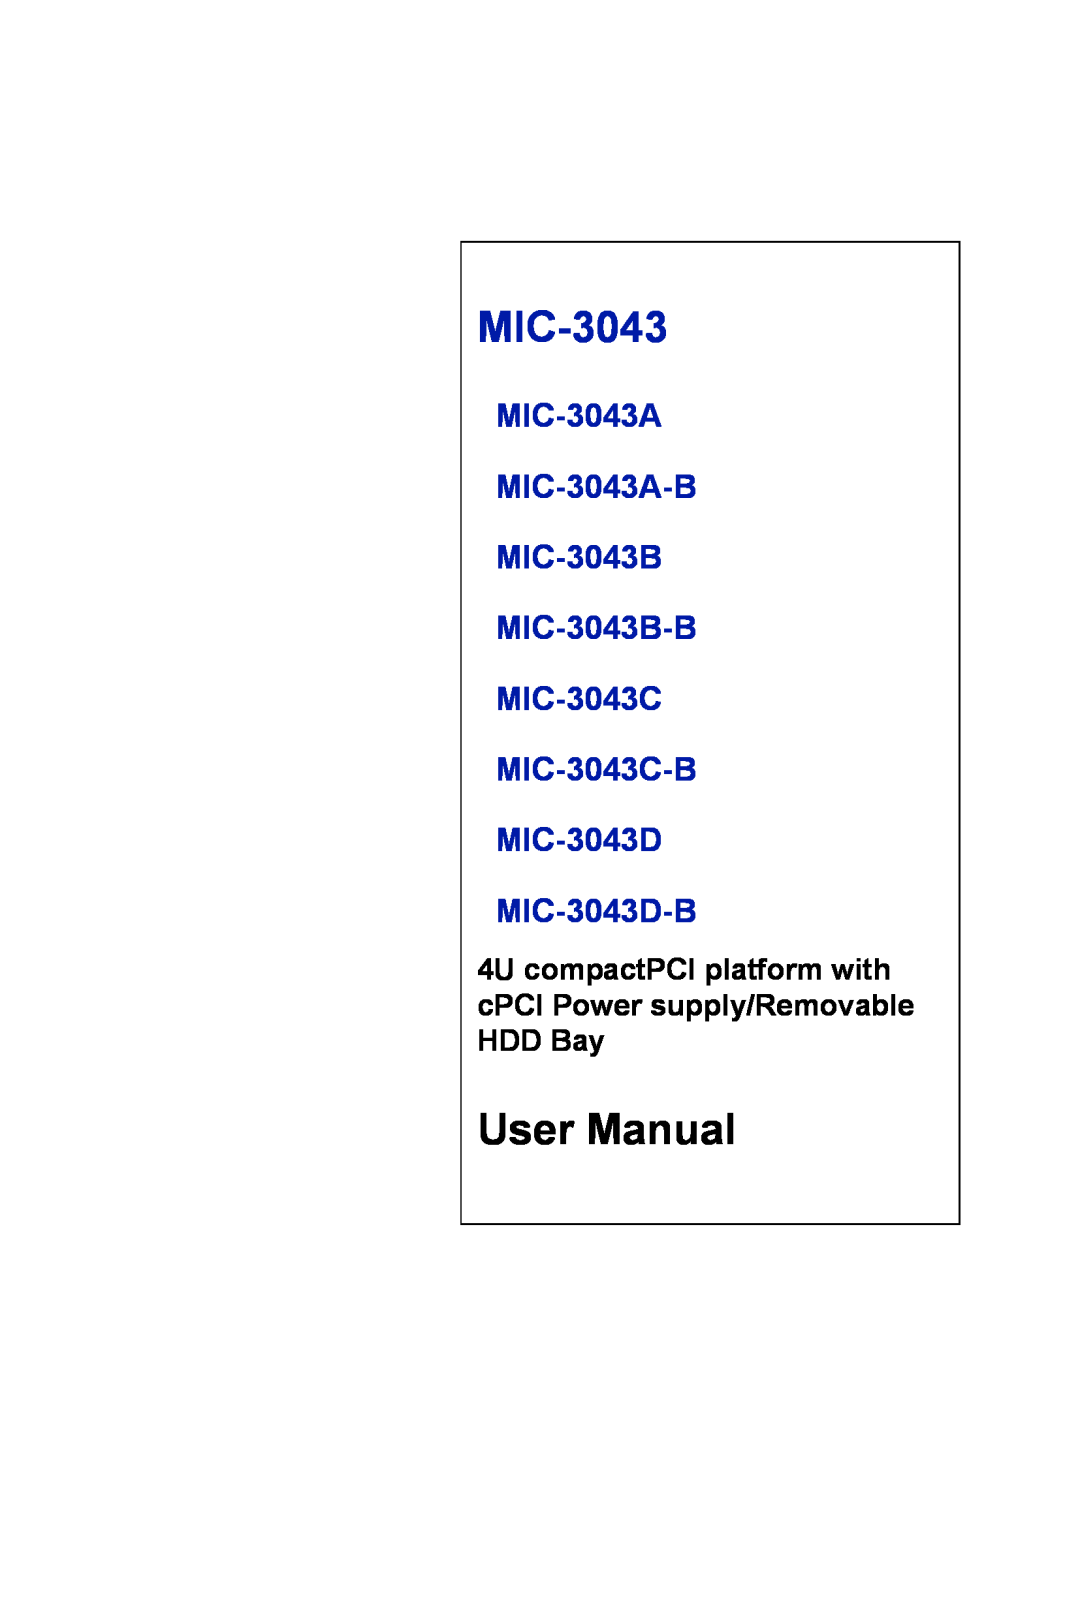 Advantech user manual 4U compactPCI platform with cPCI Power supply/Removable HDD Bay, MIC-3043D MIC-3043D-B 